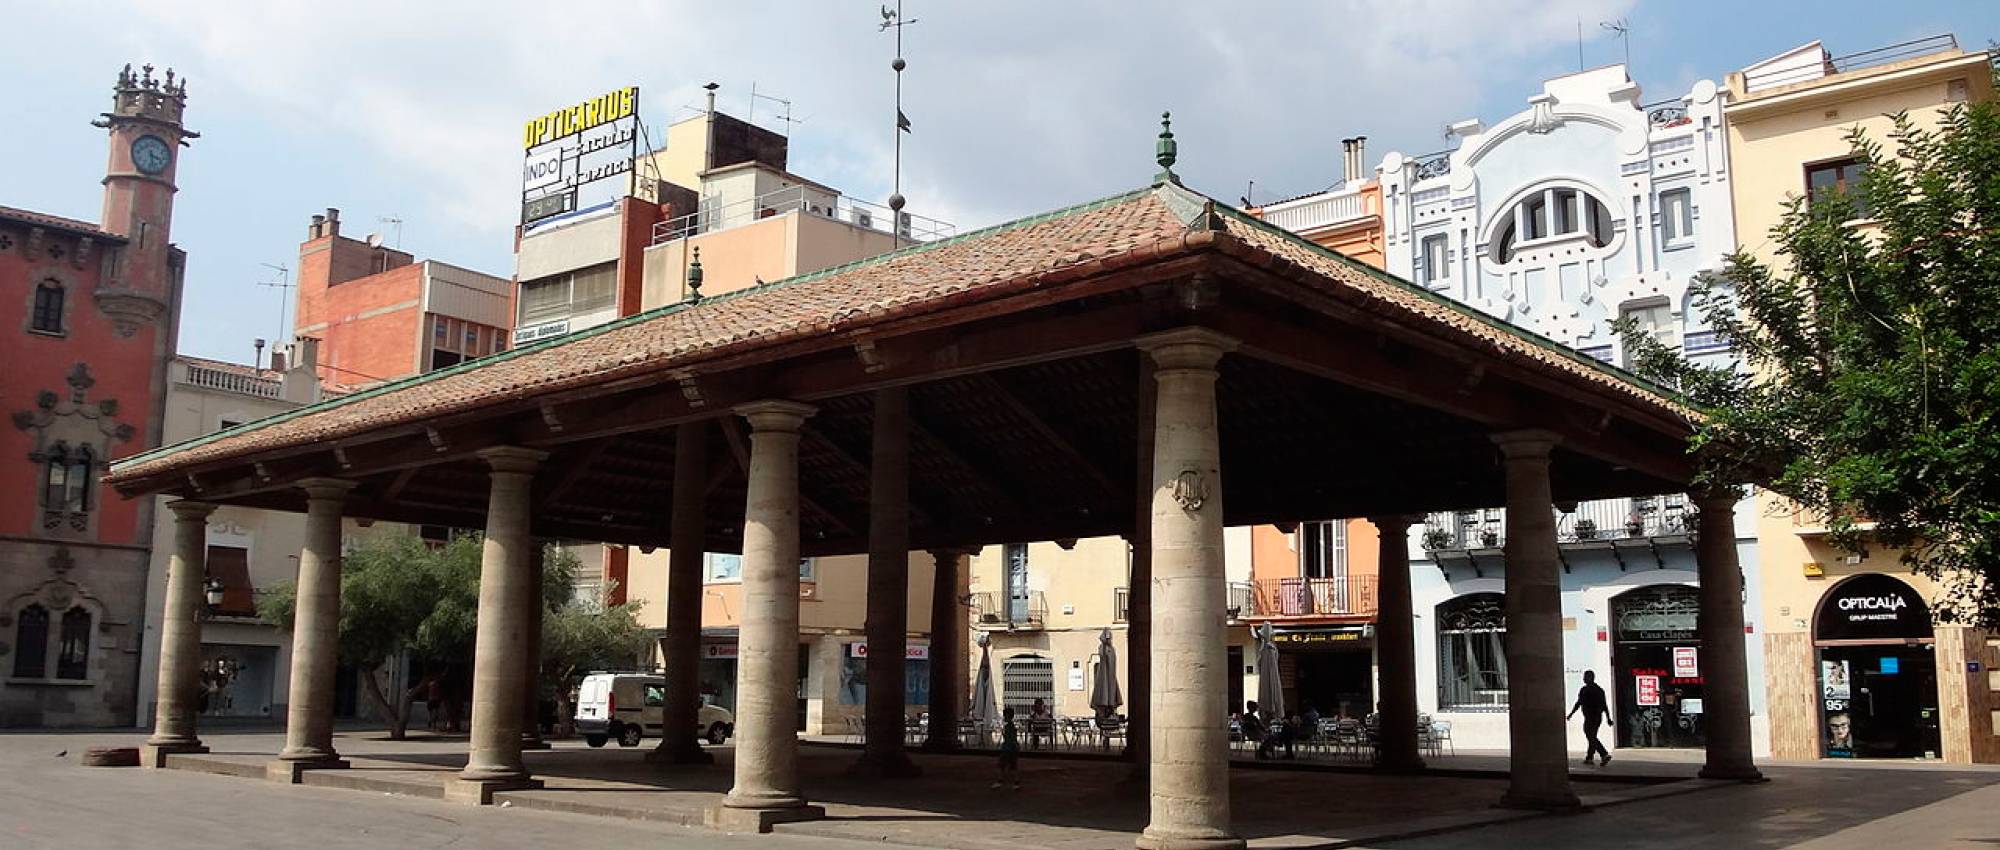 Coberta del mercat de Granollers. CC BY-SA 3.0 - Mhocalc / Wikimedia Commons